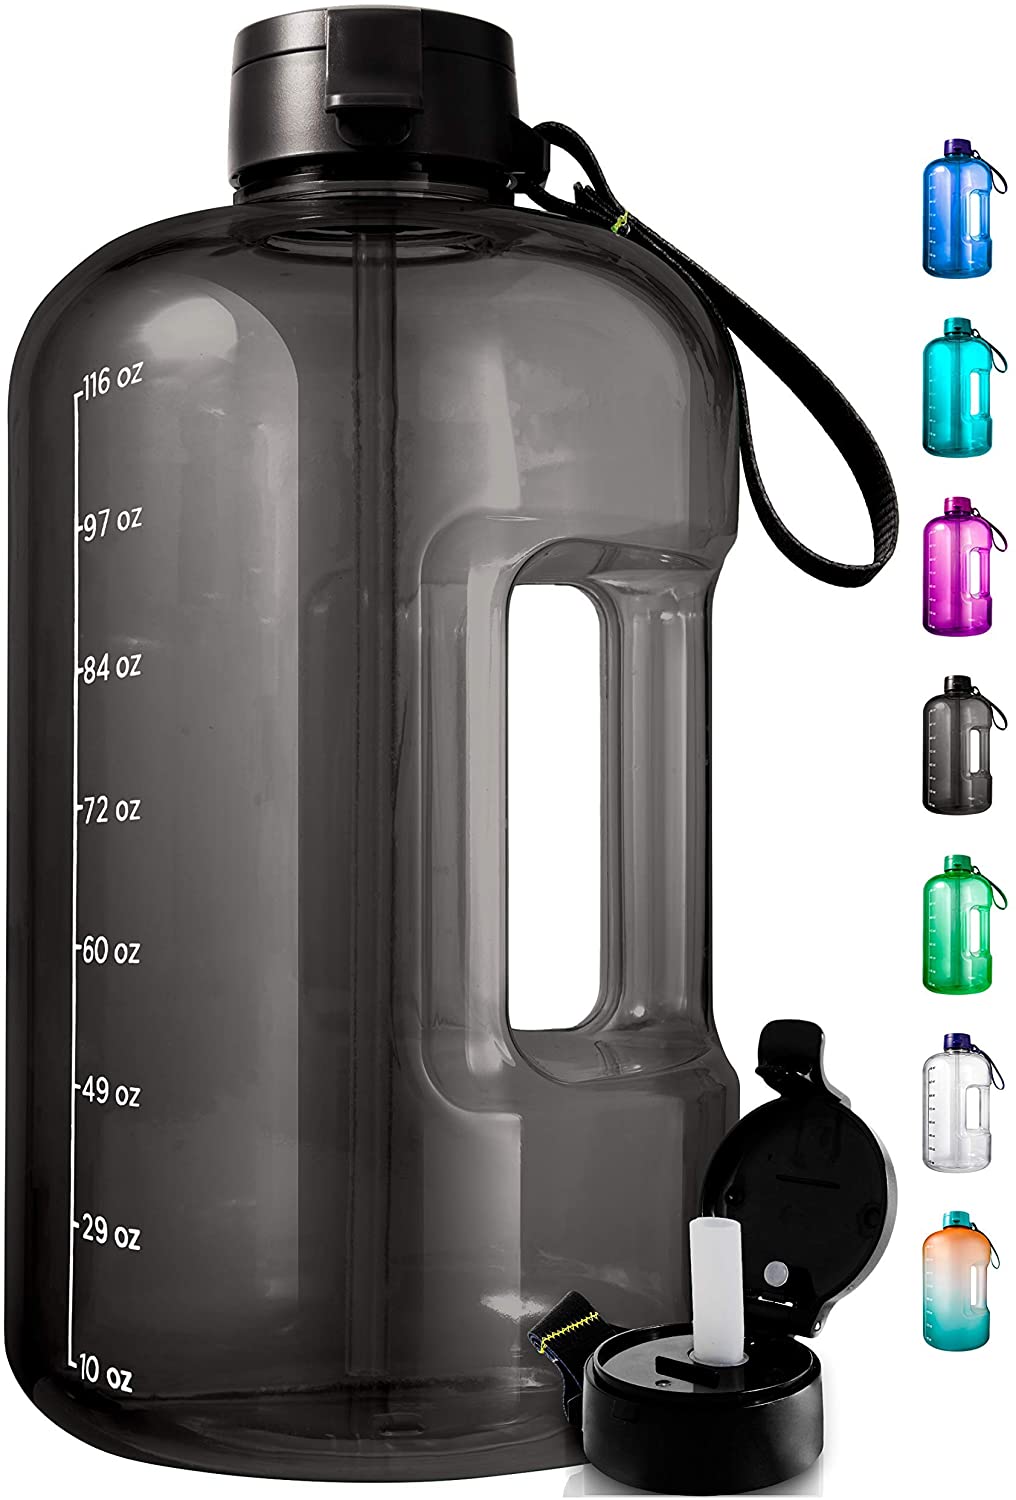 Gallon Water Bottles in Water Bottles - Walmart.com